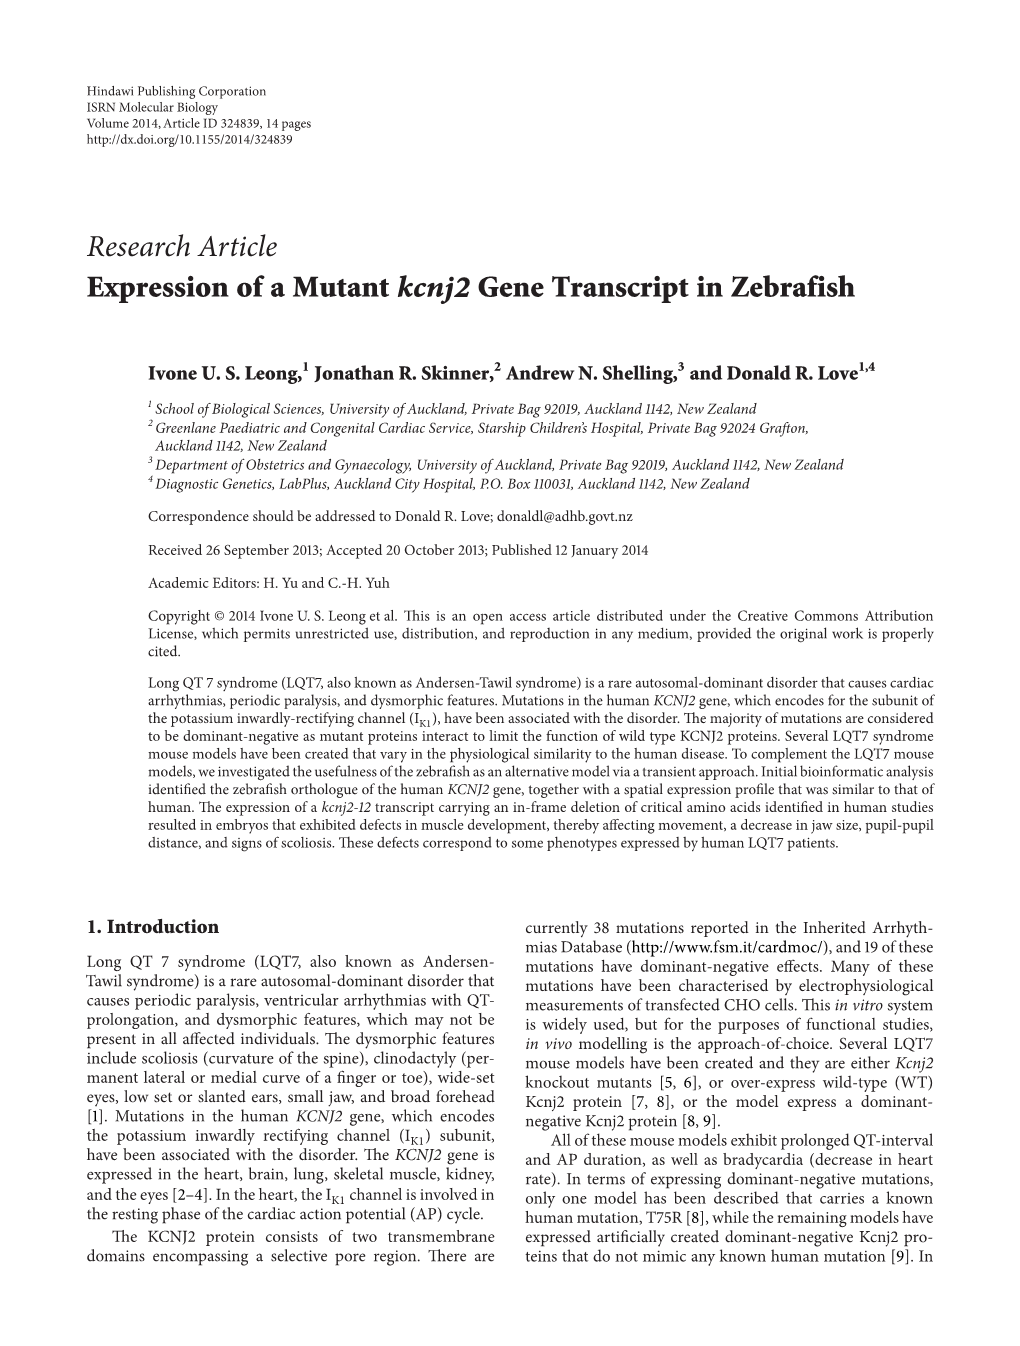 Expression of a Mutant Kcnj2 Gene Transcript in Zebrafish